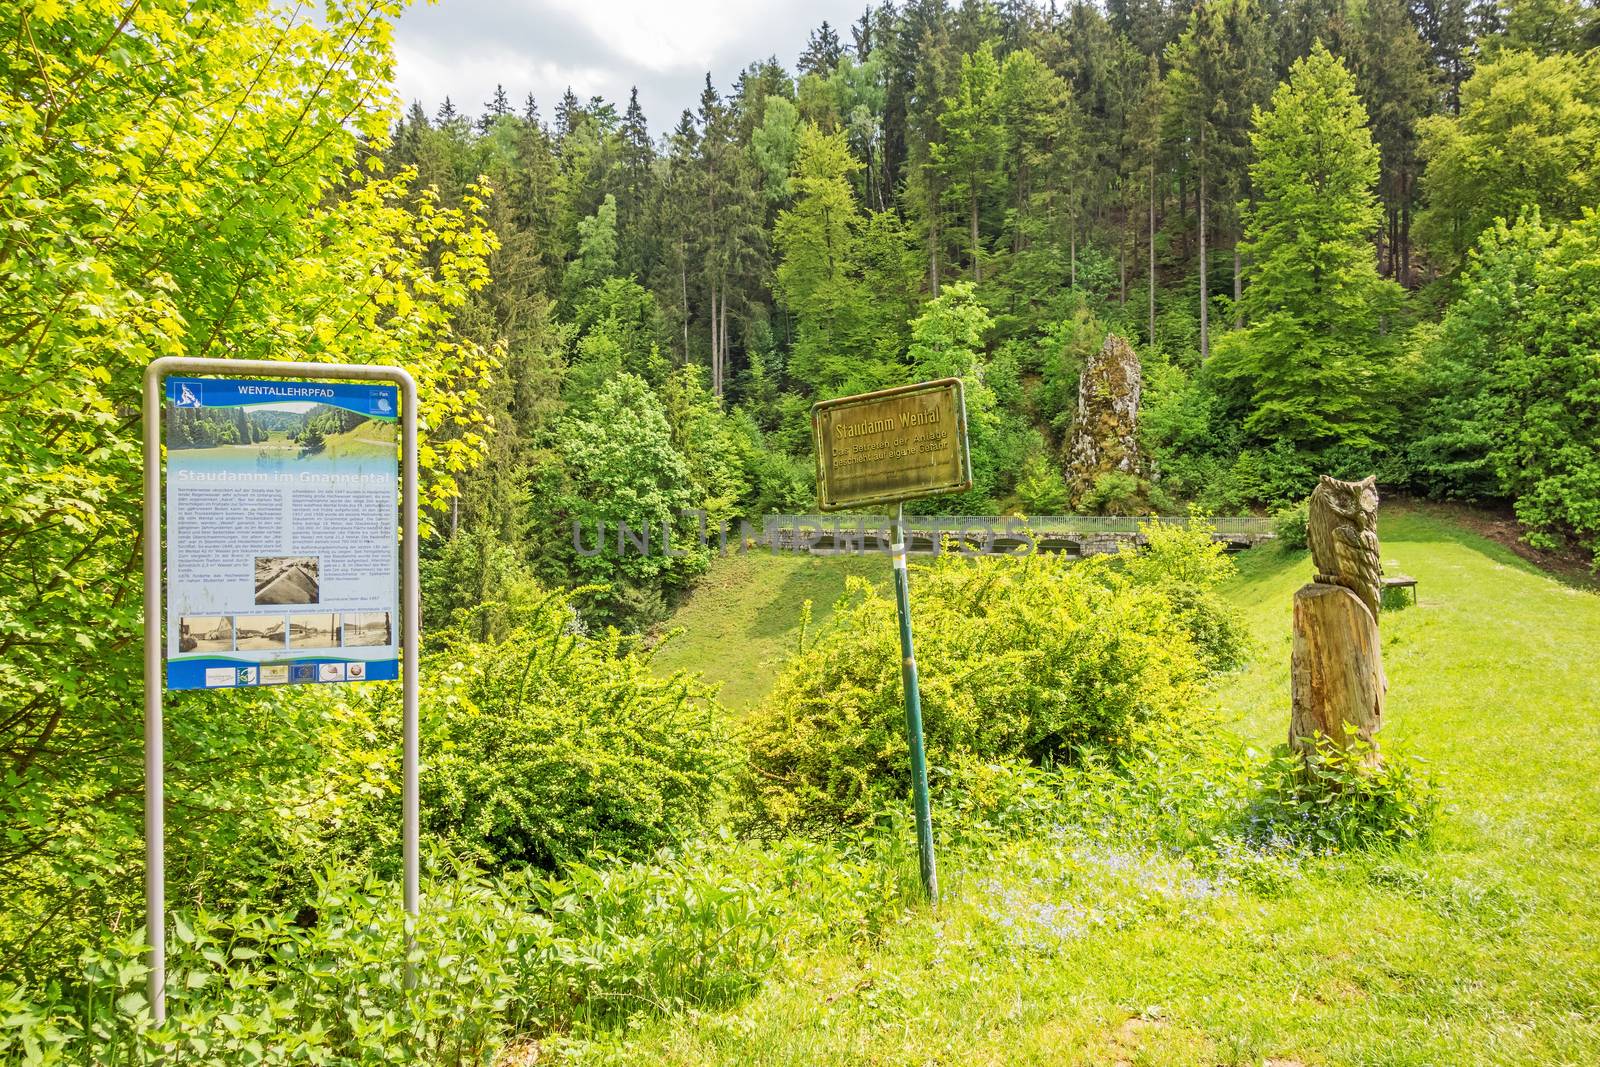 Wental valley dam signpost - Swabian Alps / Jura by aldorado